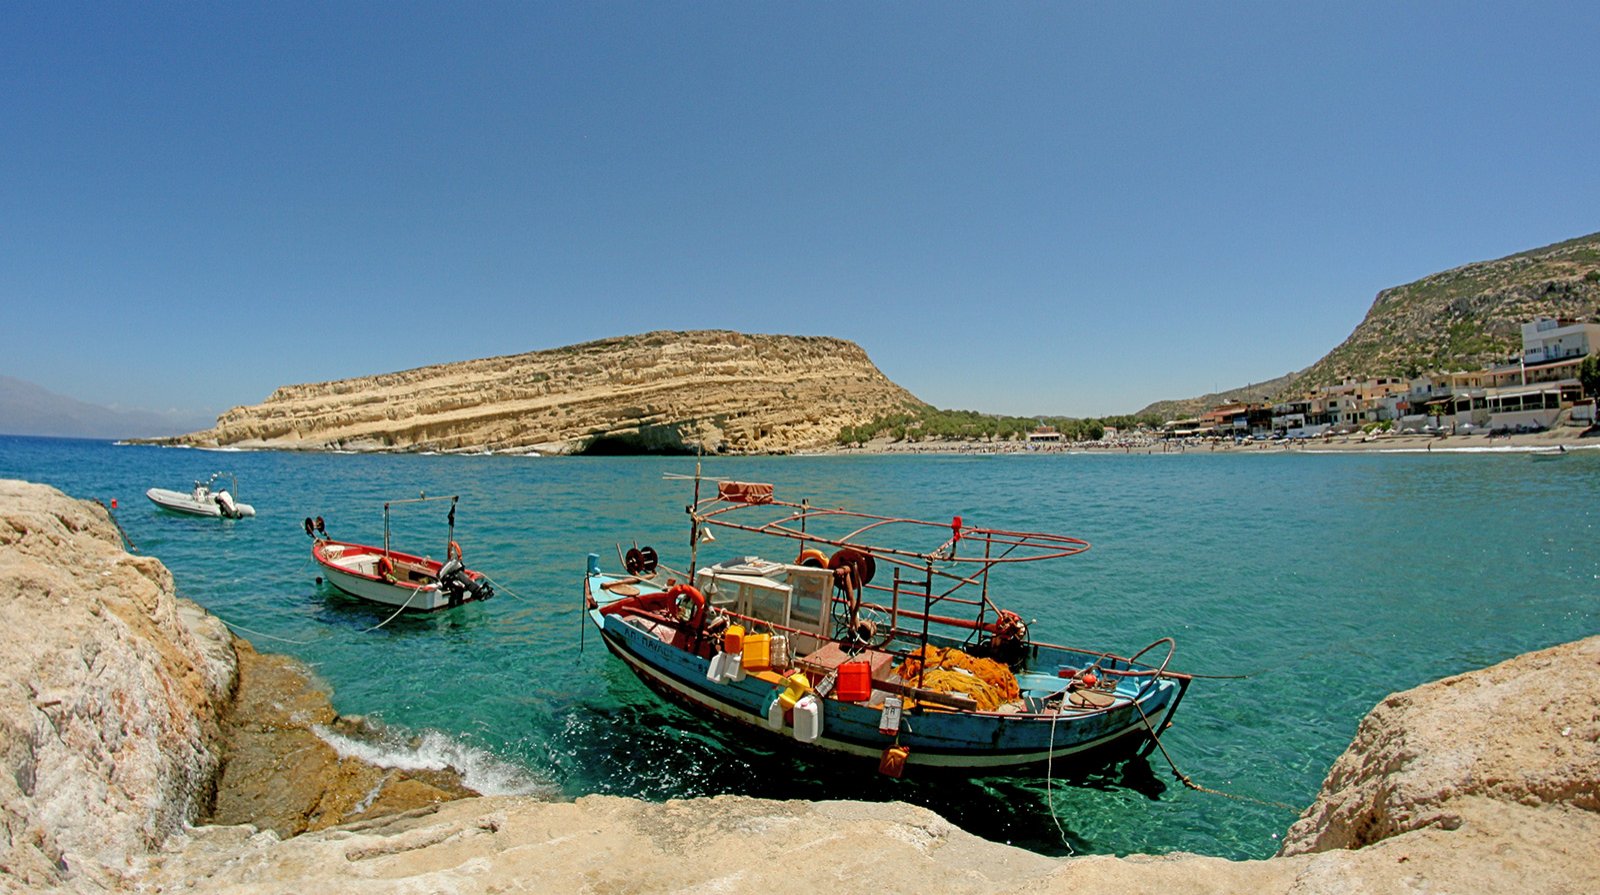 Matala beach, Crete